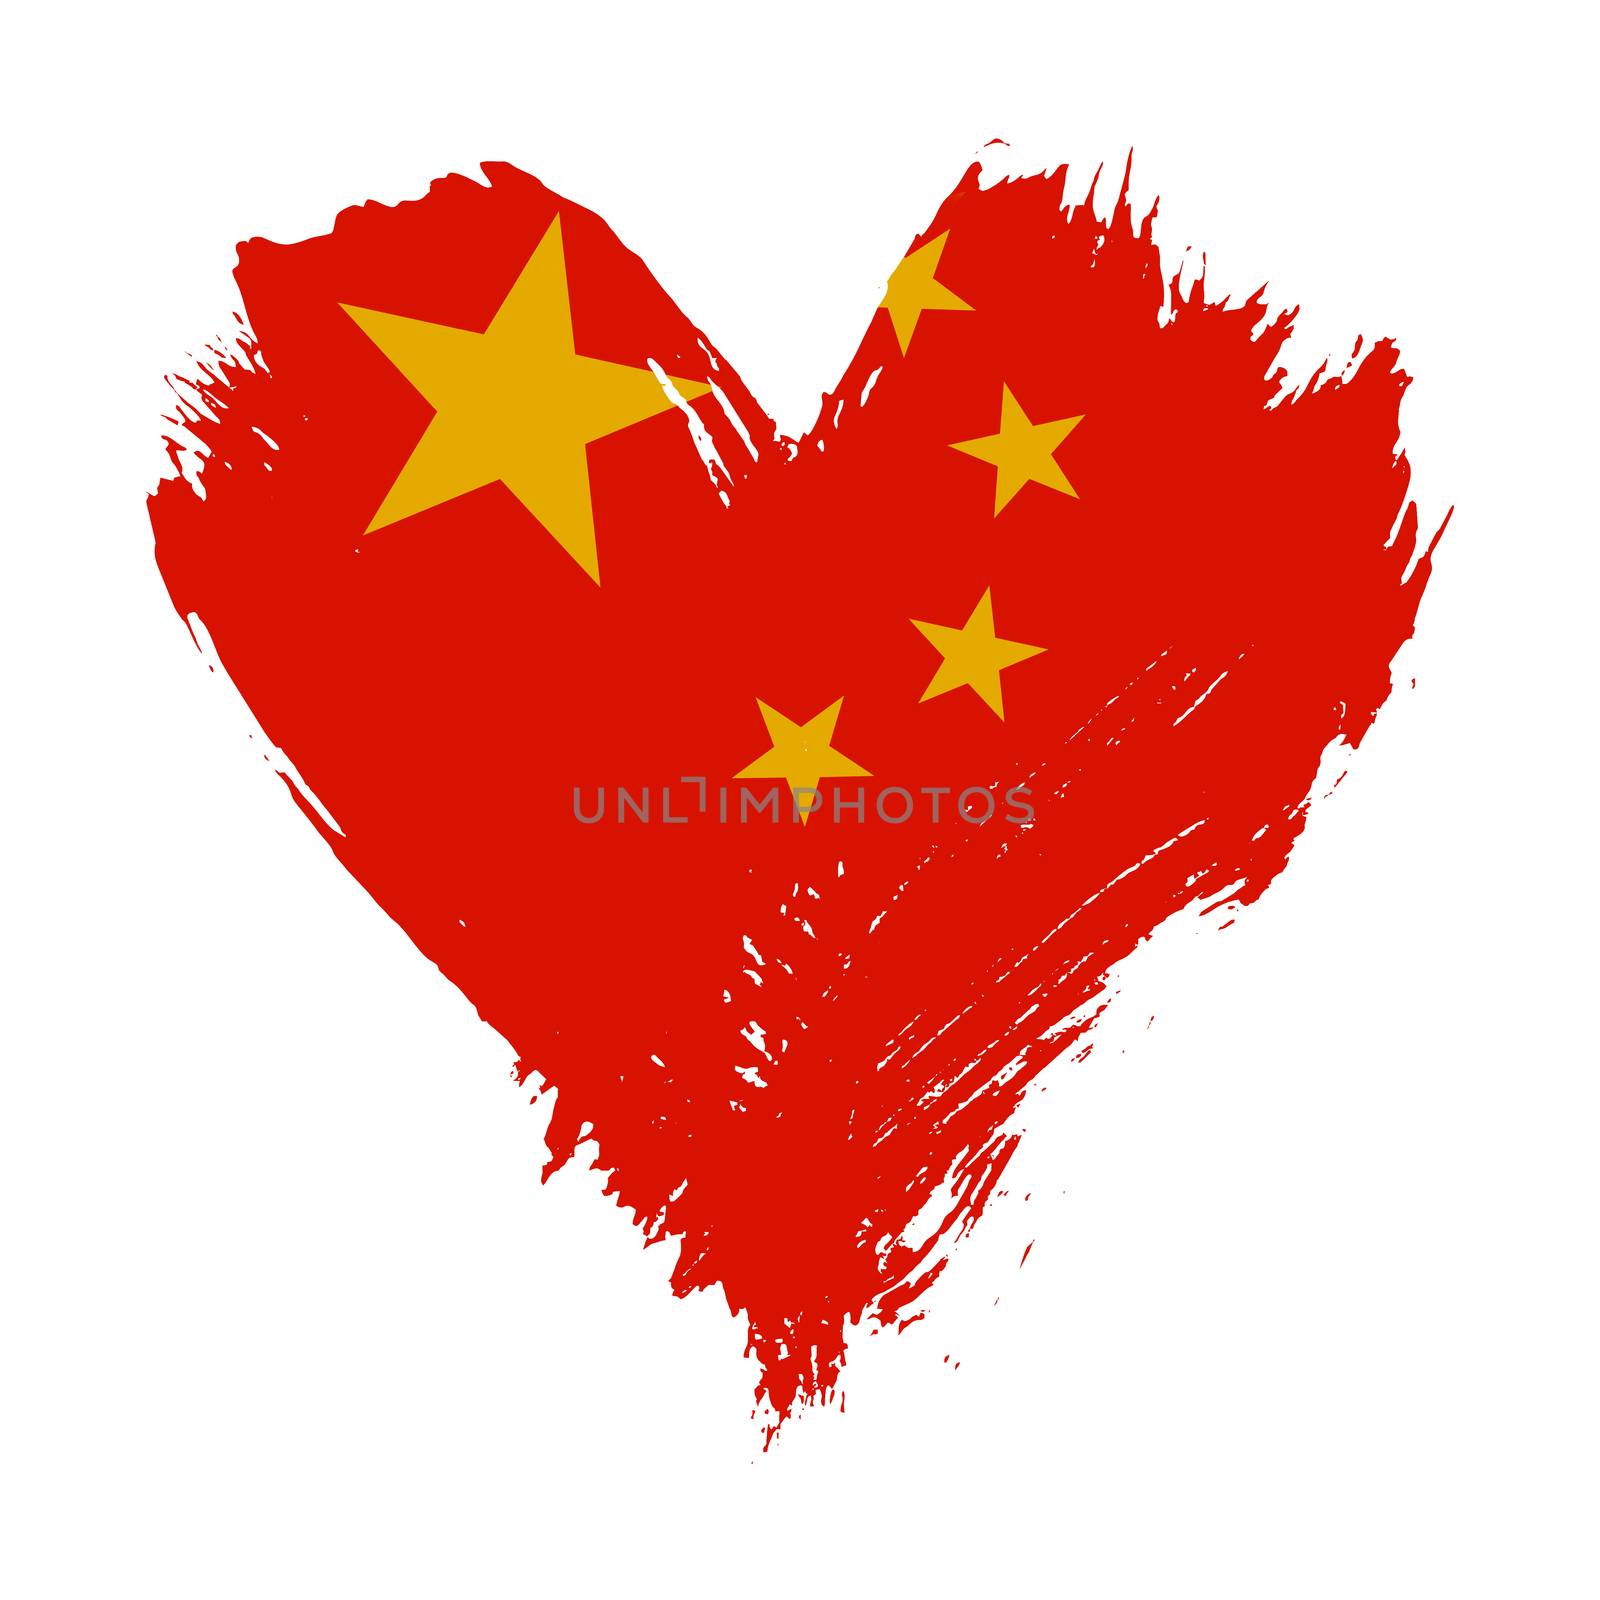 Grunge brushstroke painted illustration of heart shaped distressed Chinese flag isolated on white background